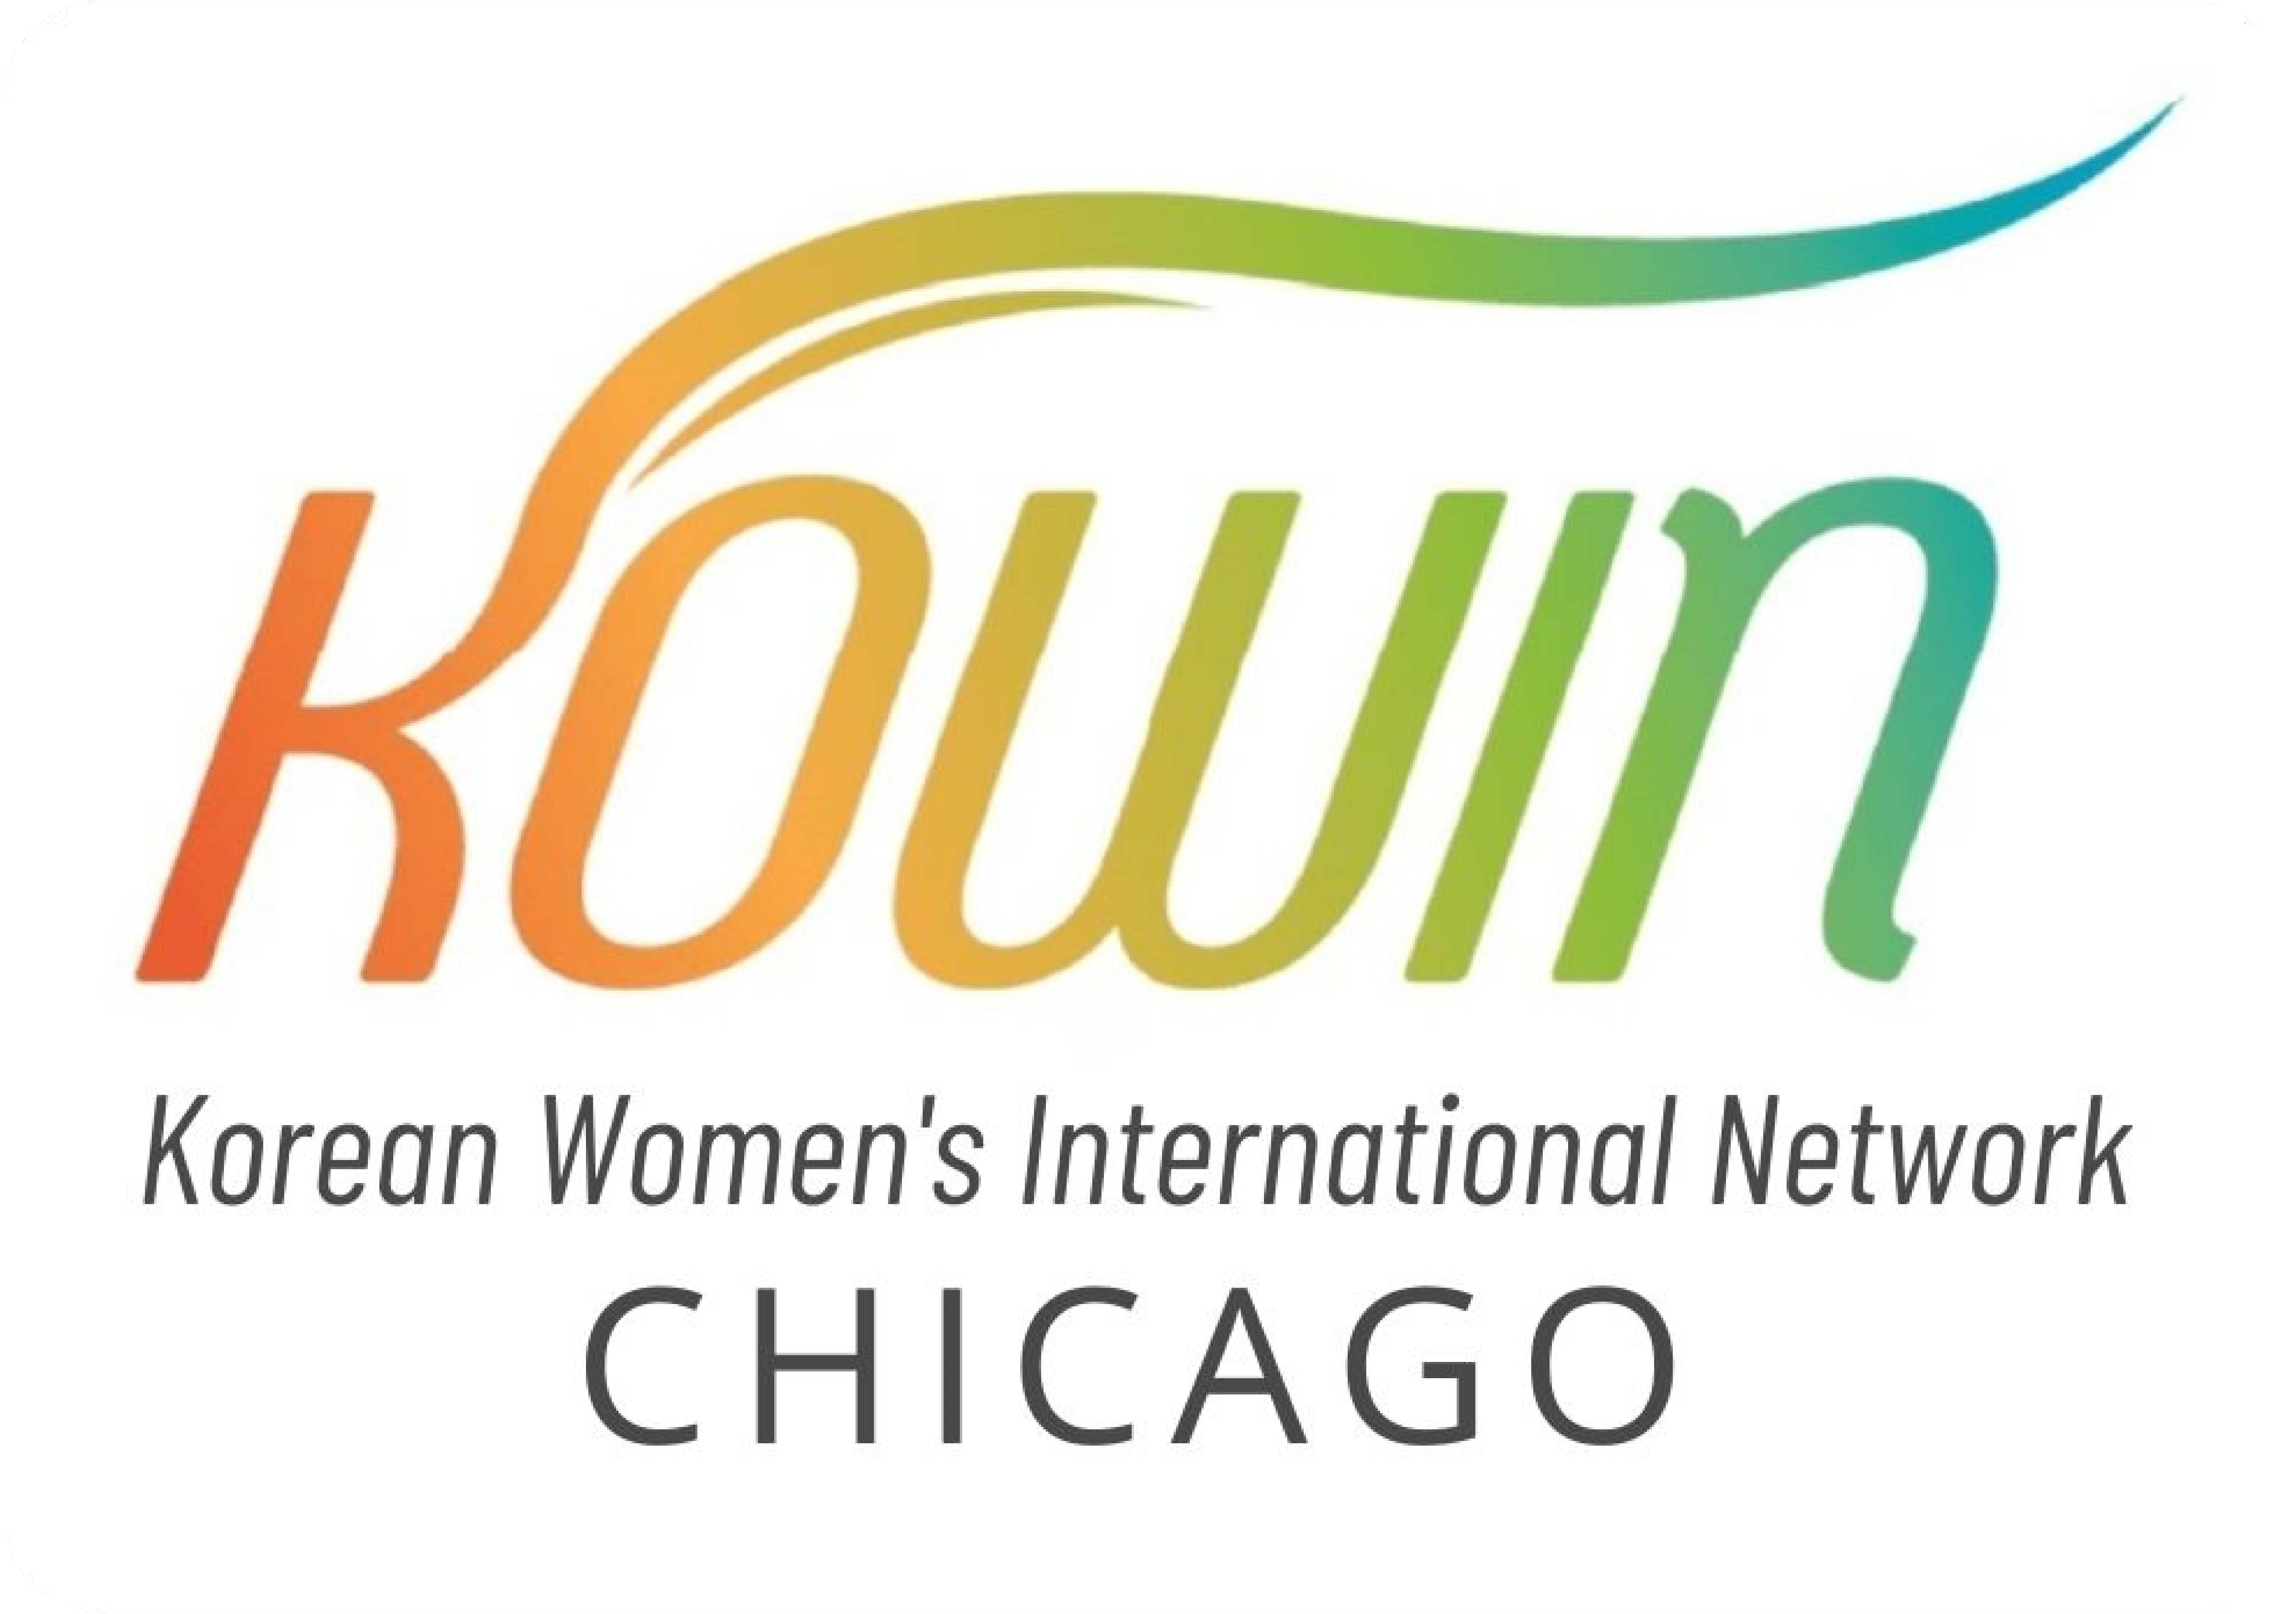 Korean Women's International Network